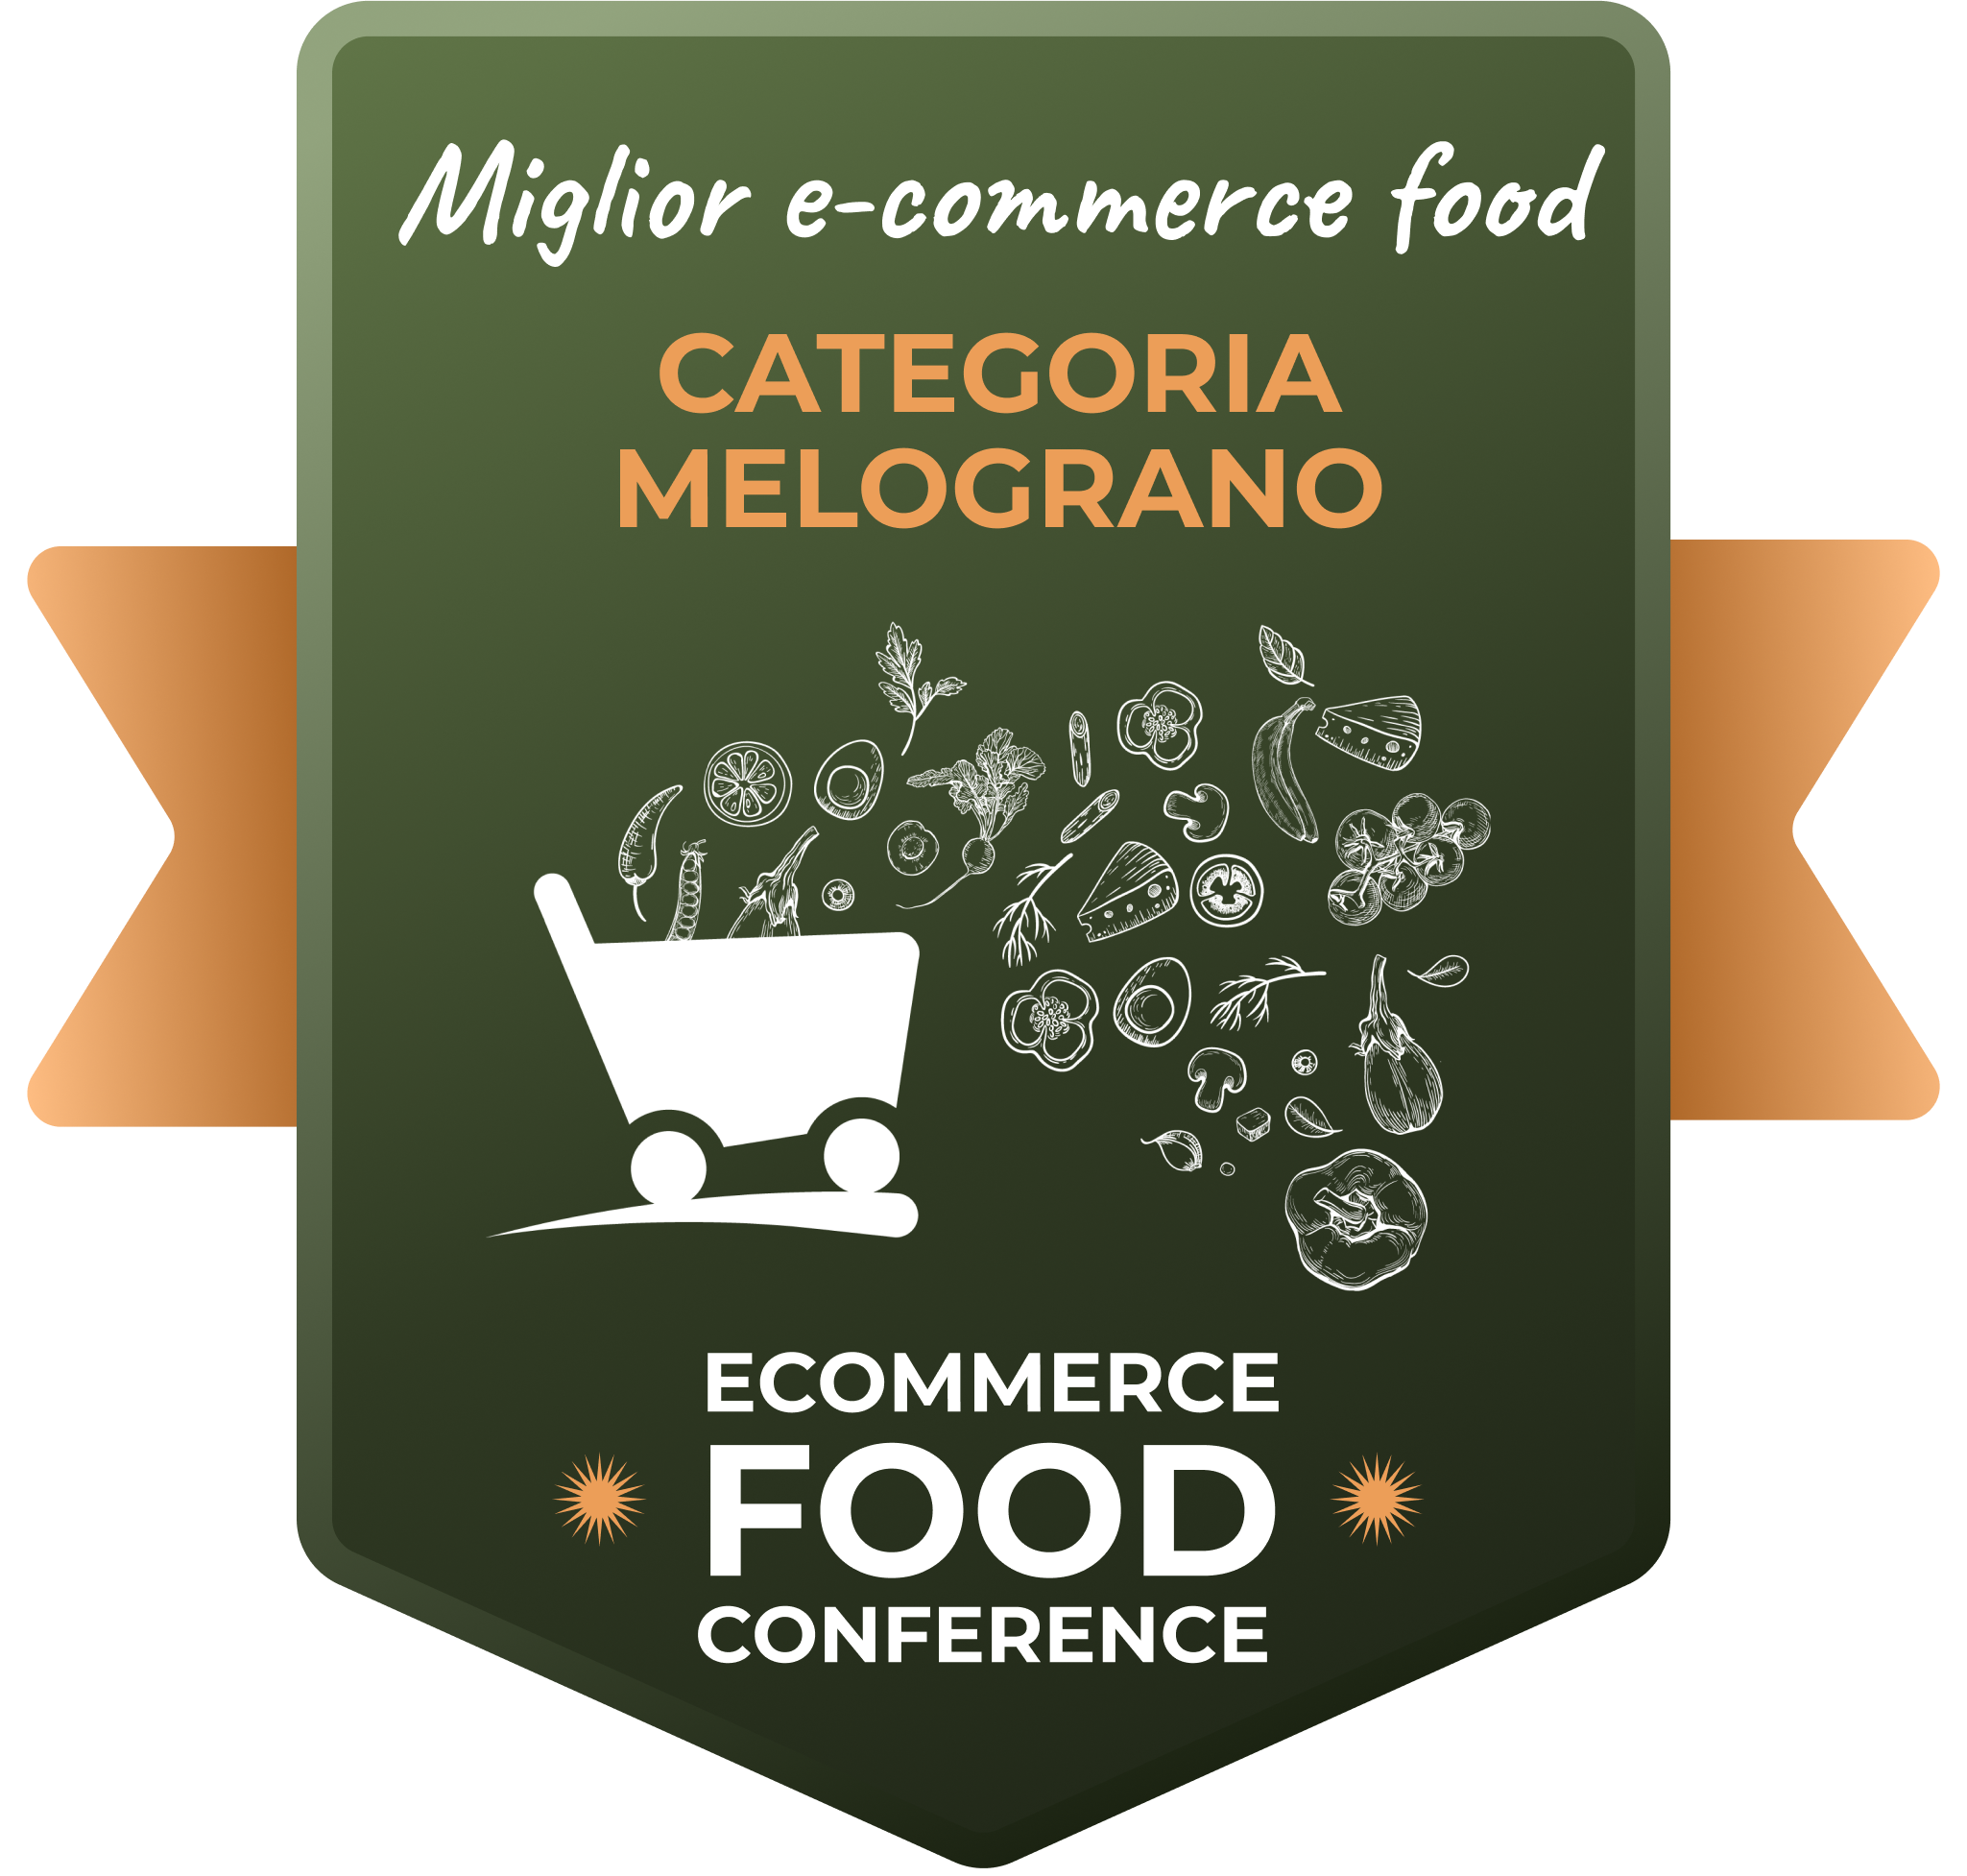 miglior e-commerce food - categoria melagrana